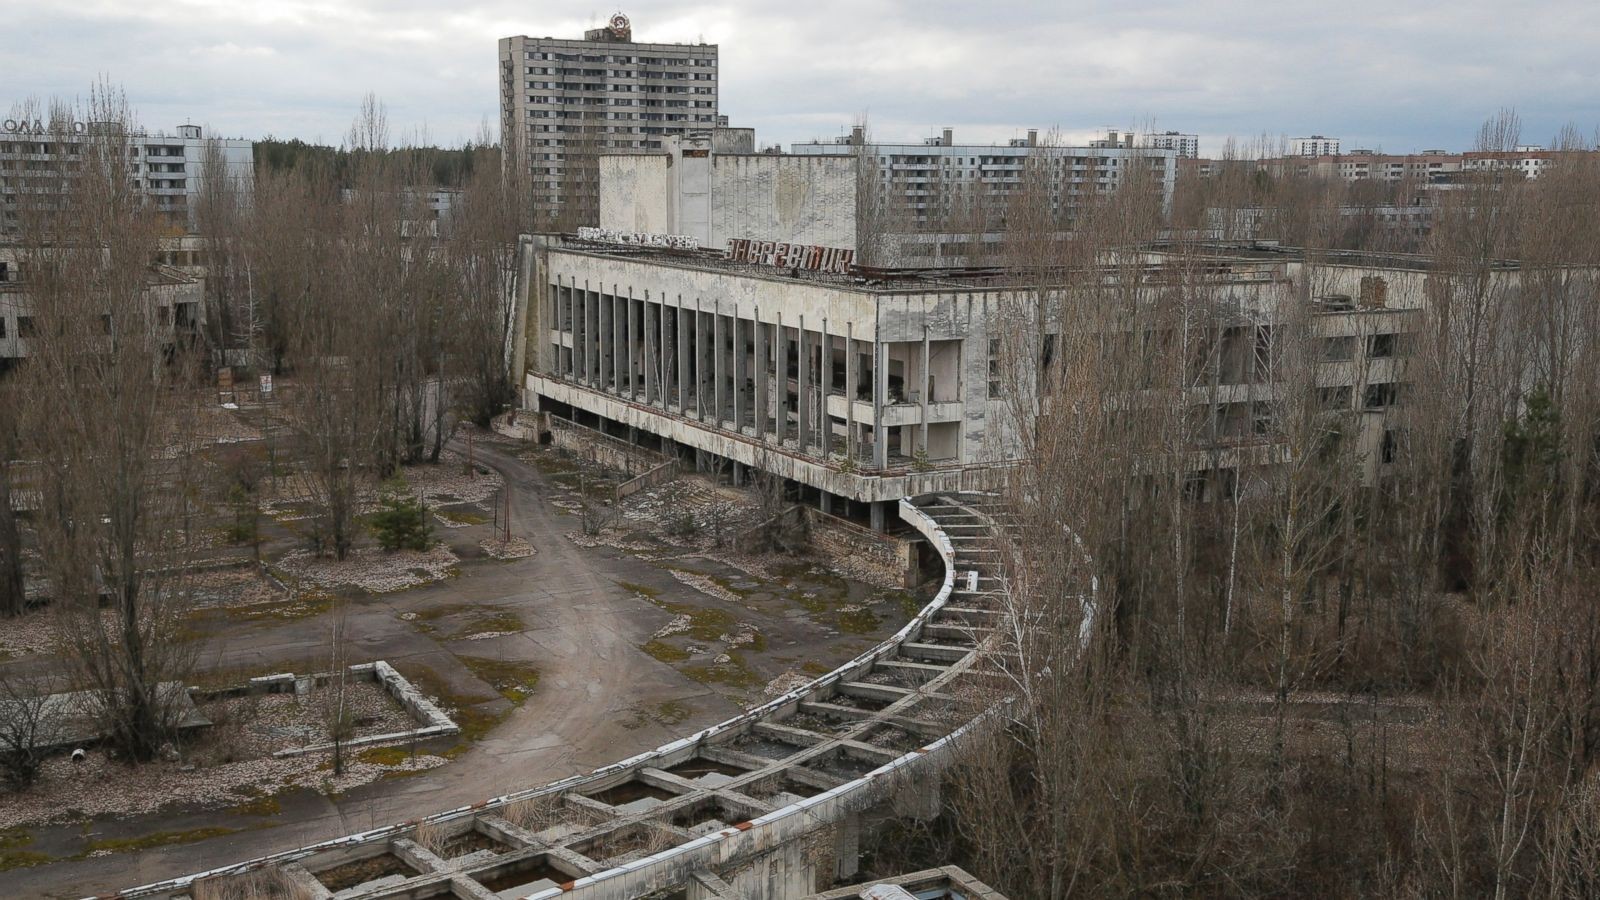 ap-ukraine-chernobyl-ml-160425-16x9-1600.jpg